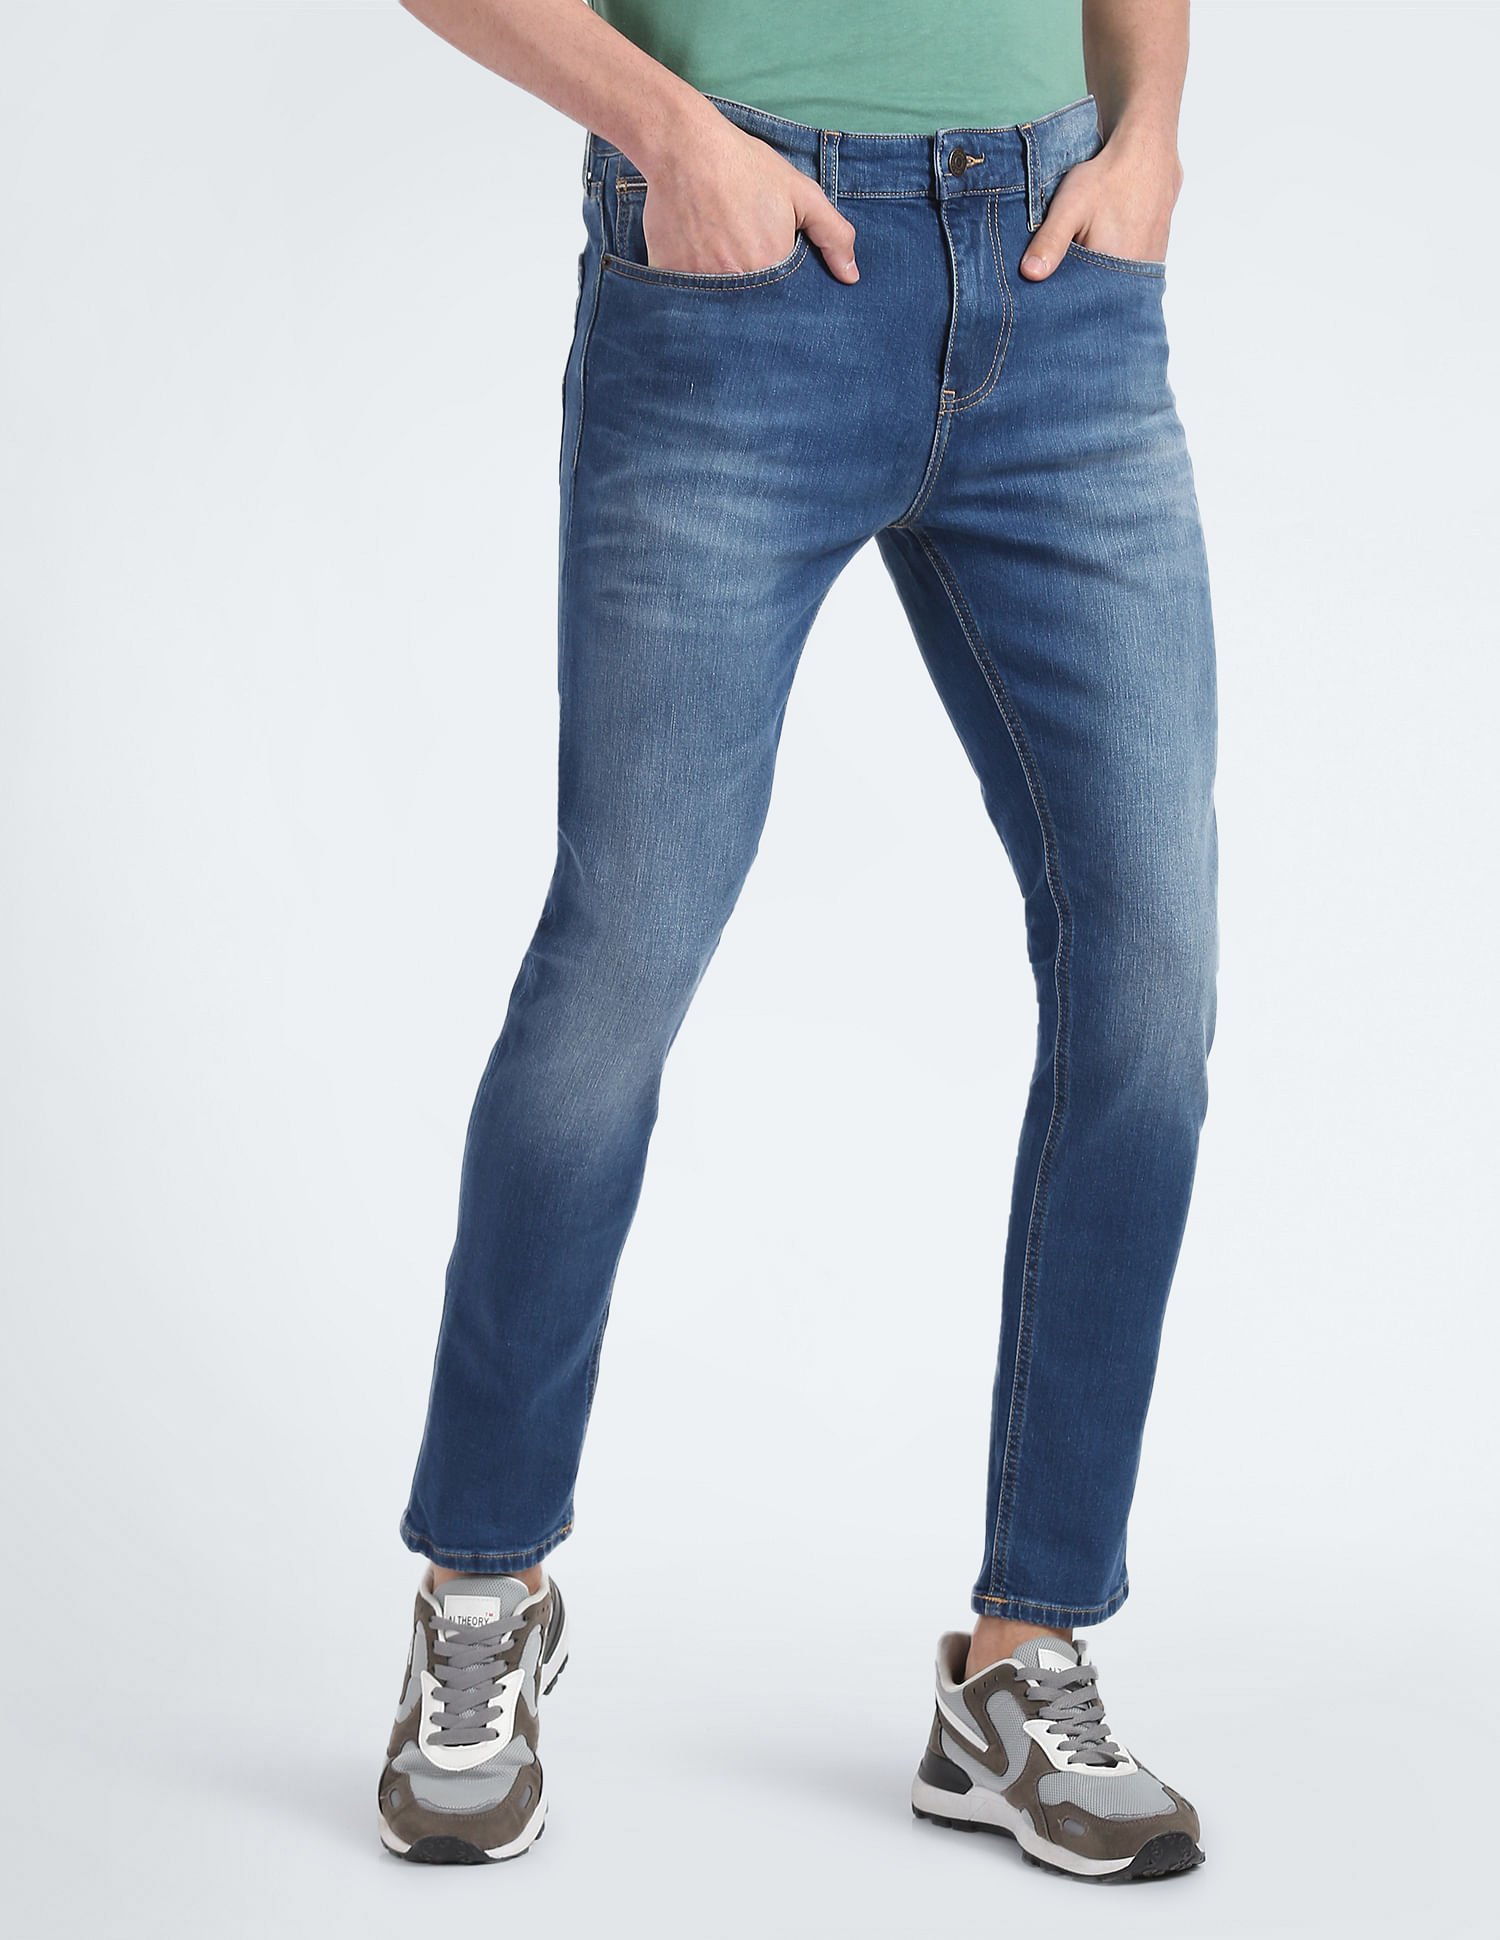 Buy Hilfiger Slim Tapered Stretch Jeans - NNNOW.com